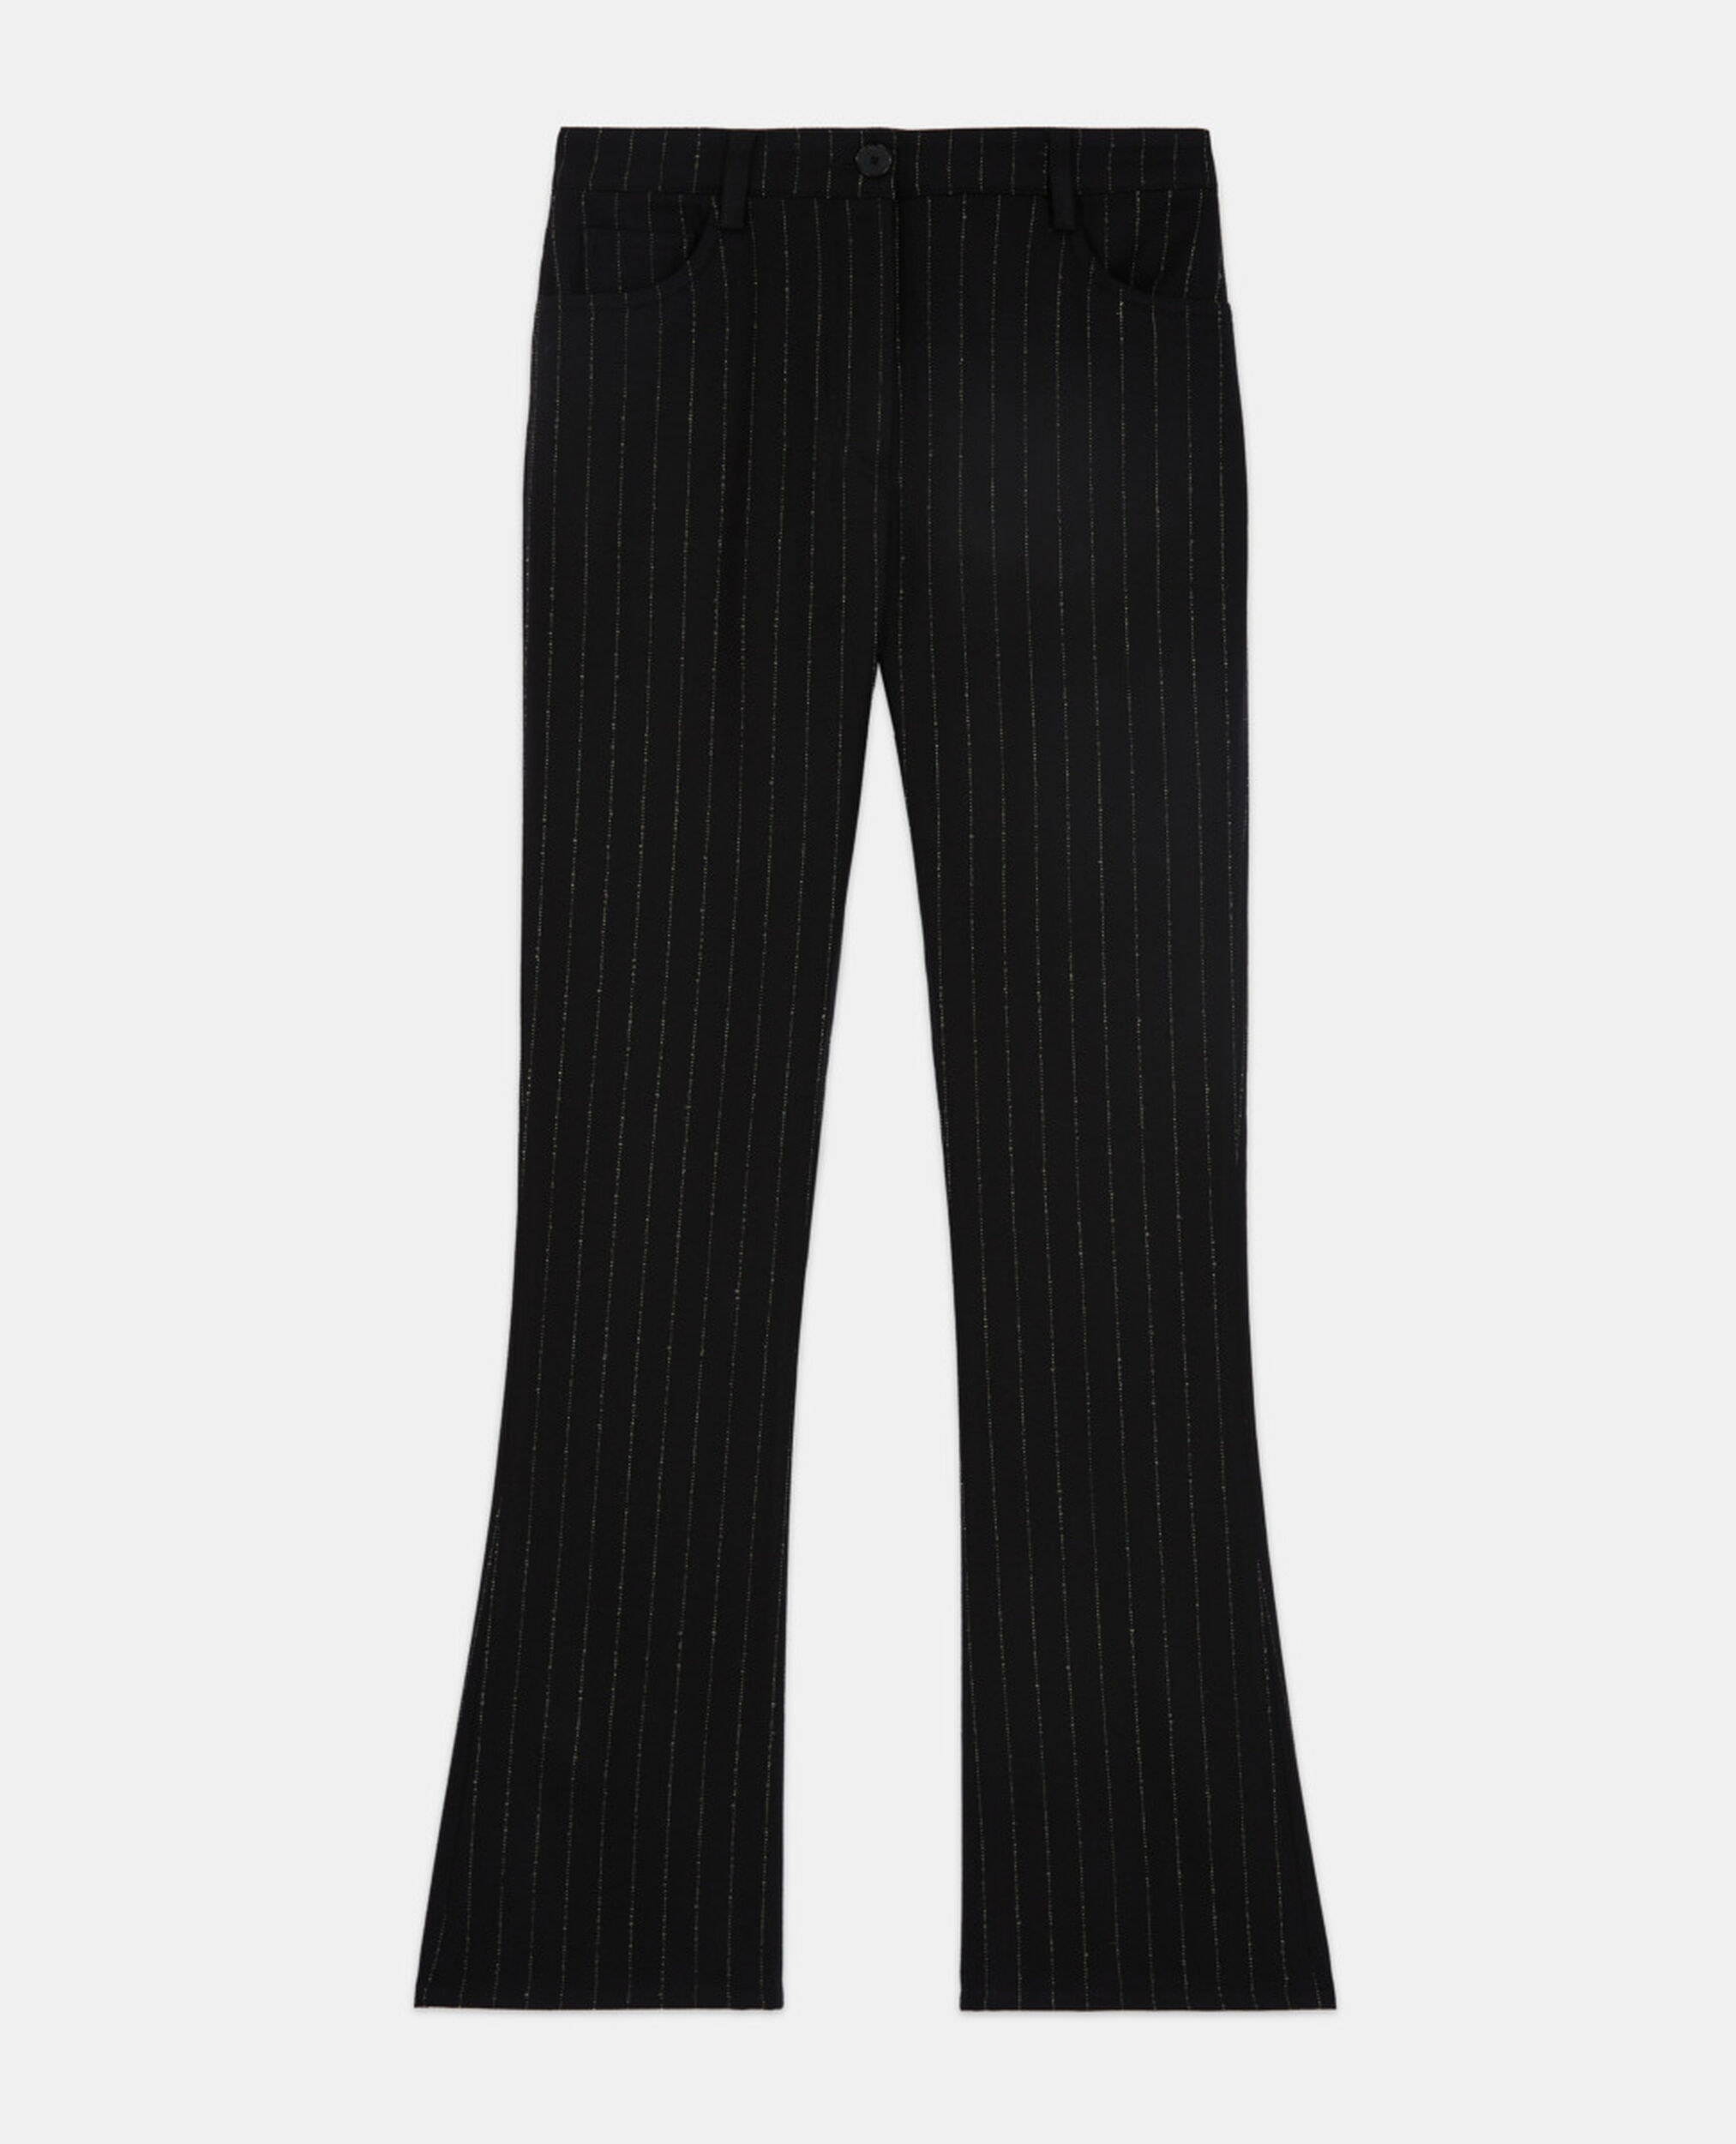 Pantalón traje lana rayas, BLACK WHITE, hi-res image number null